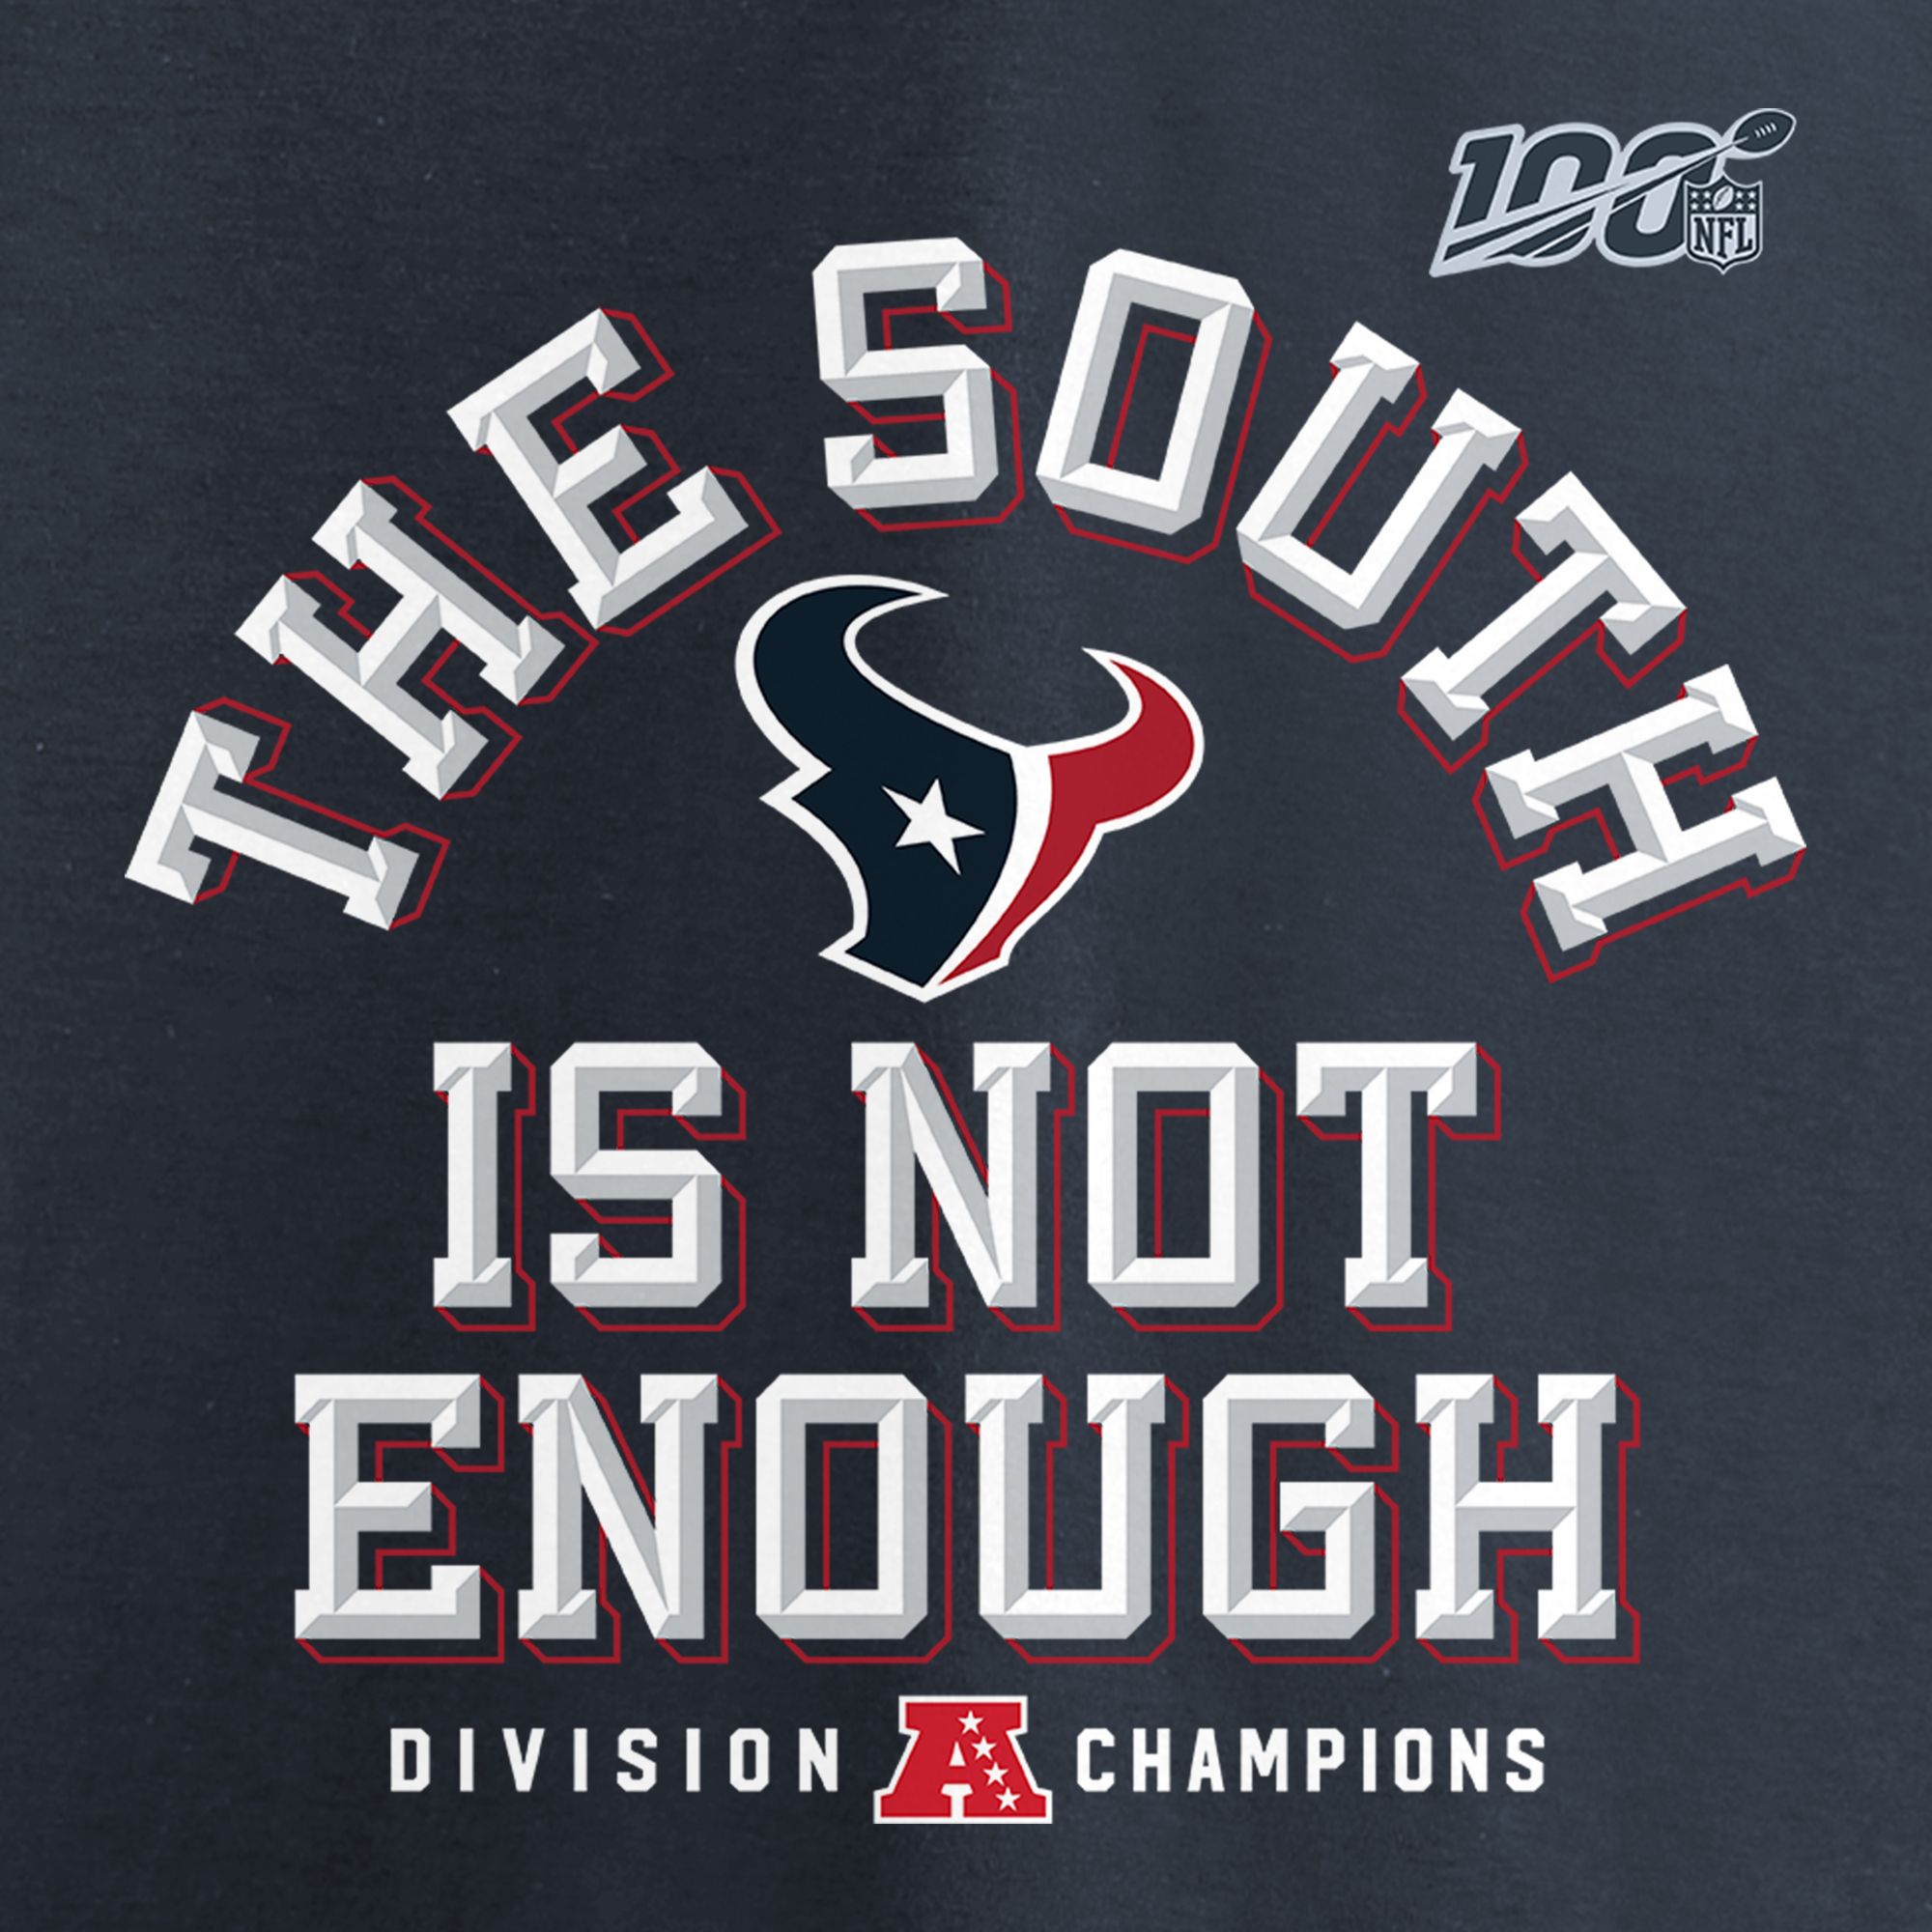 houston texans afc south champions shirt